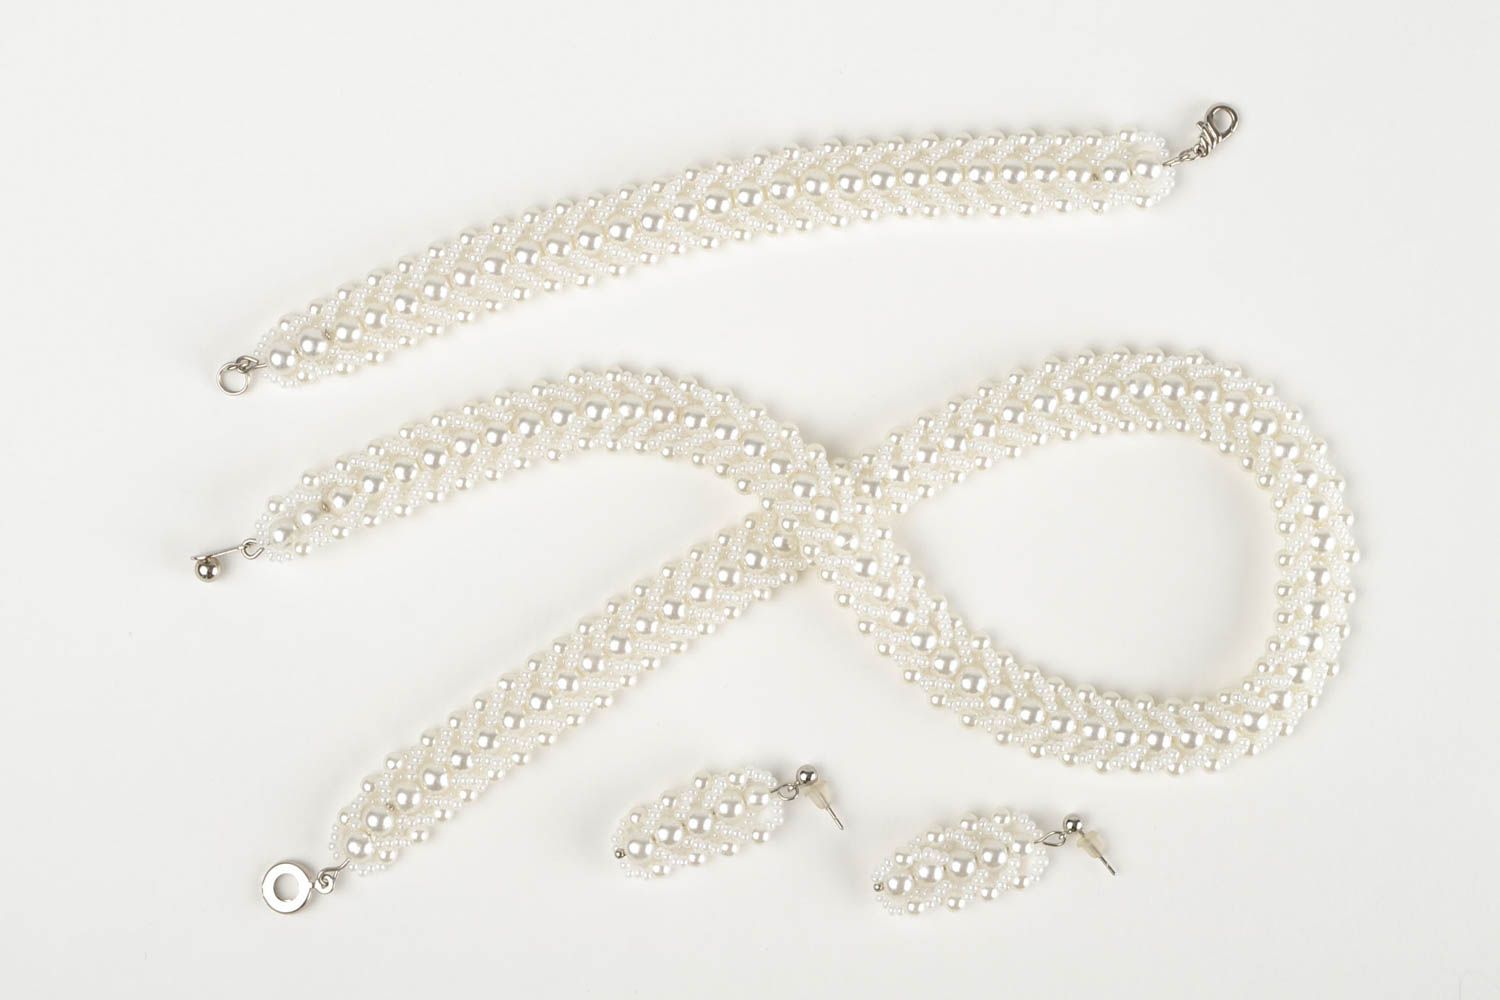 Beaded necklace, earrings and bracelet designer handmade bijouterie accesories photo 4